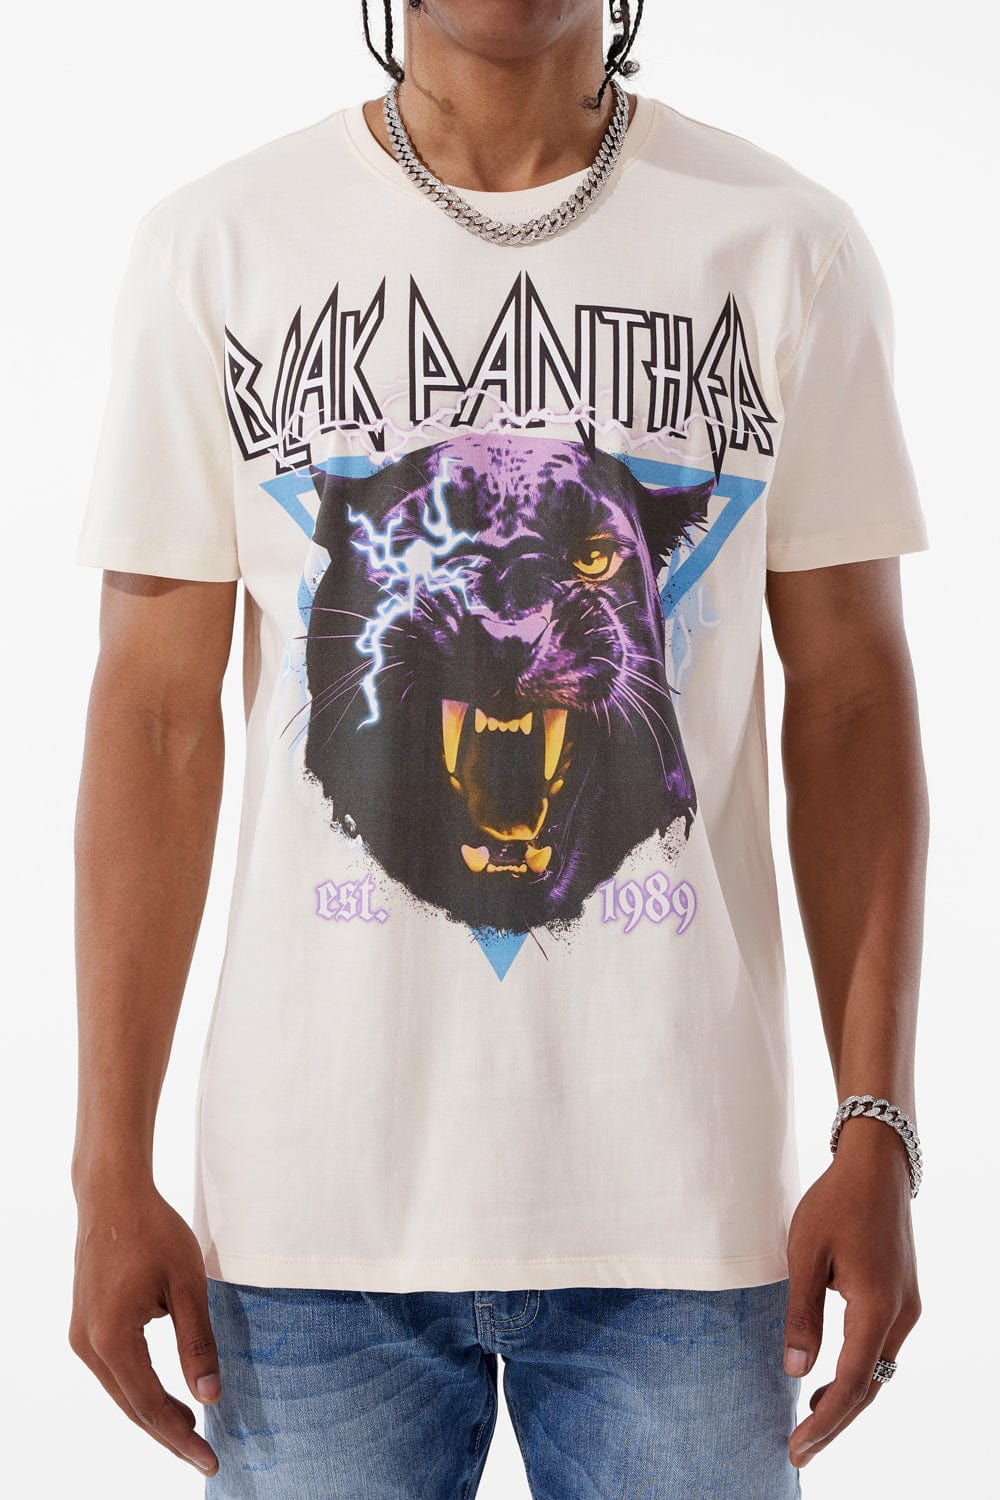 Jordan Craig Blak Panther T-Shirt (Cream) S / Cream